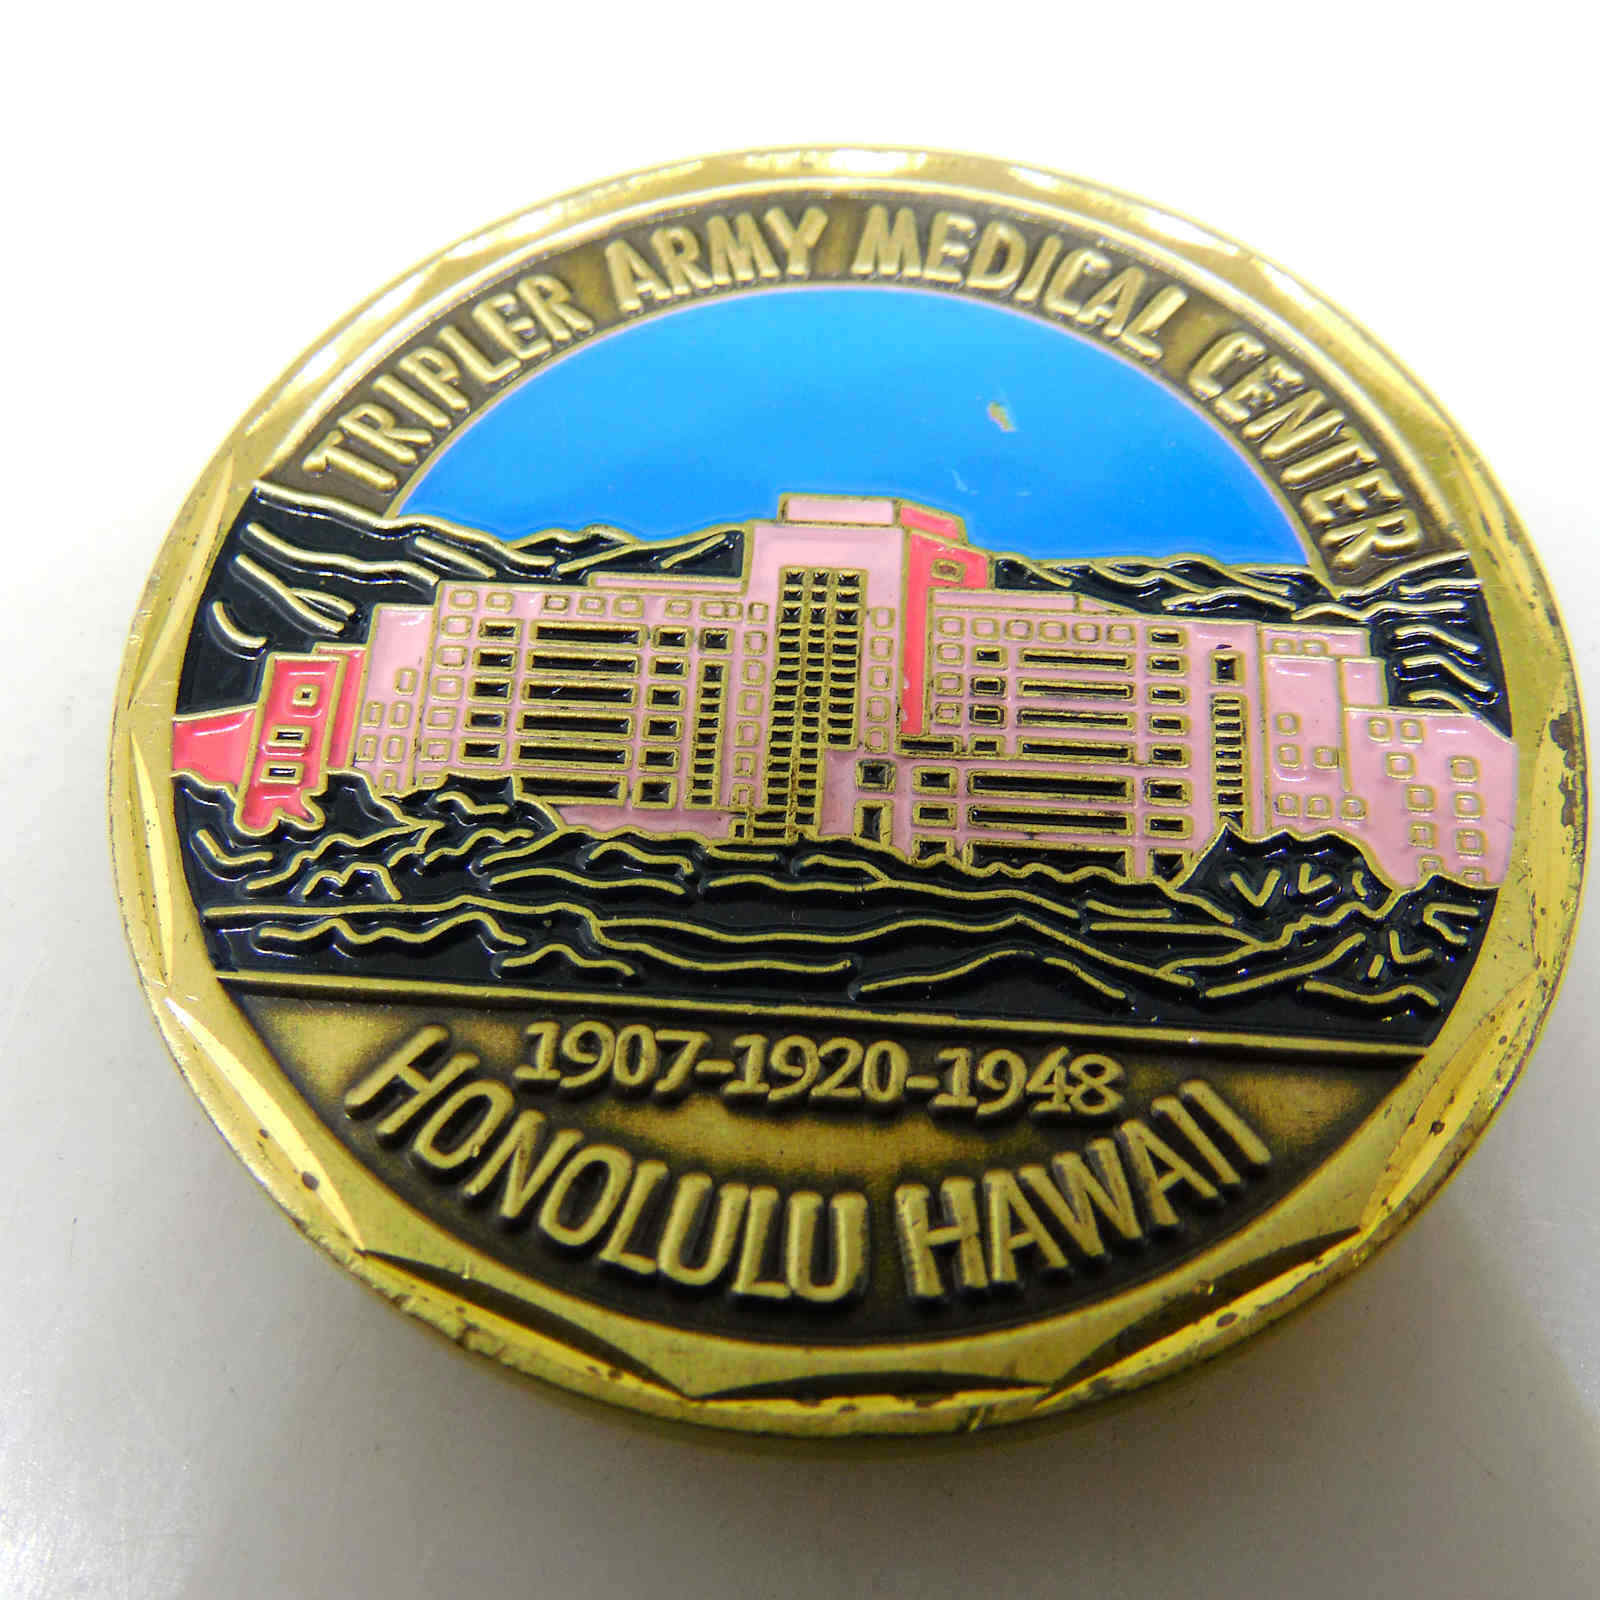 TRIPLER ARMY MEDICAL CENTER HONOLULU HAWAII TRIPLER CHALLENGE COIN